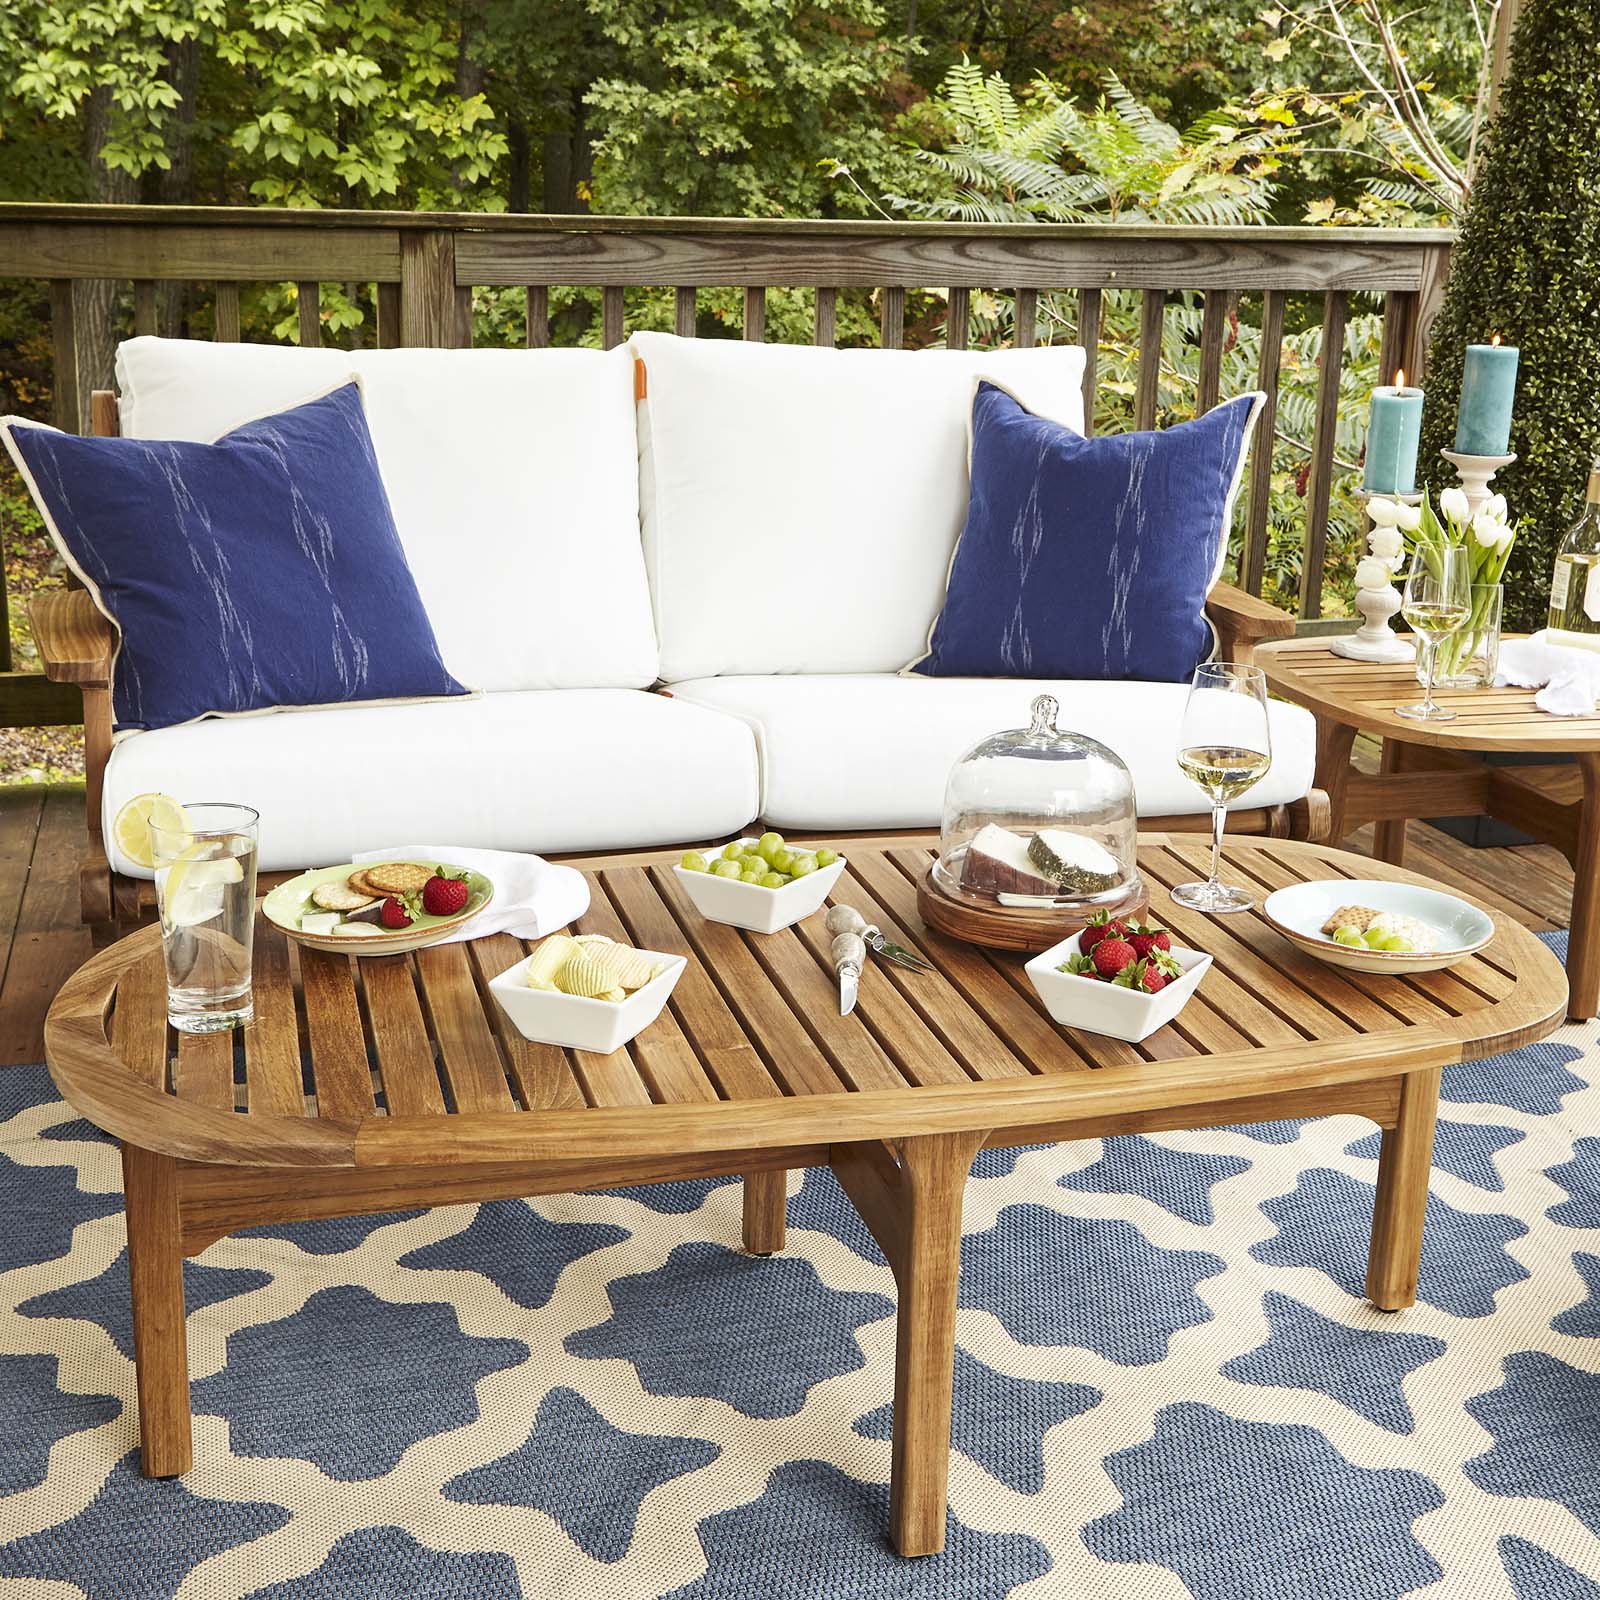 Saratoga Outdoor Patio Premium Grade A Teak Wood Oval Coffee Table